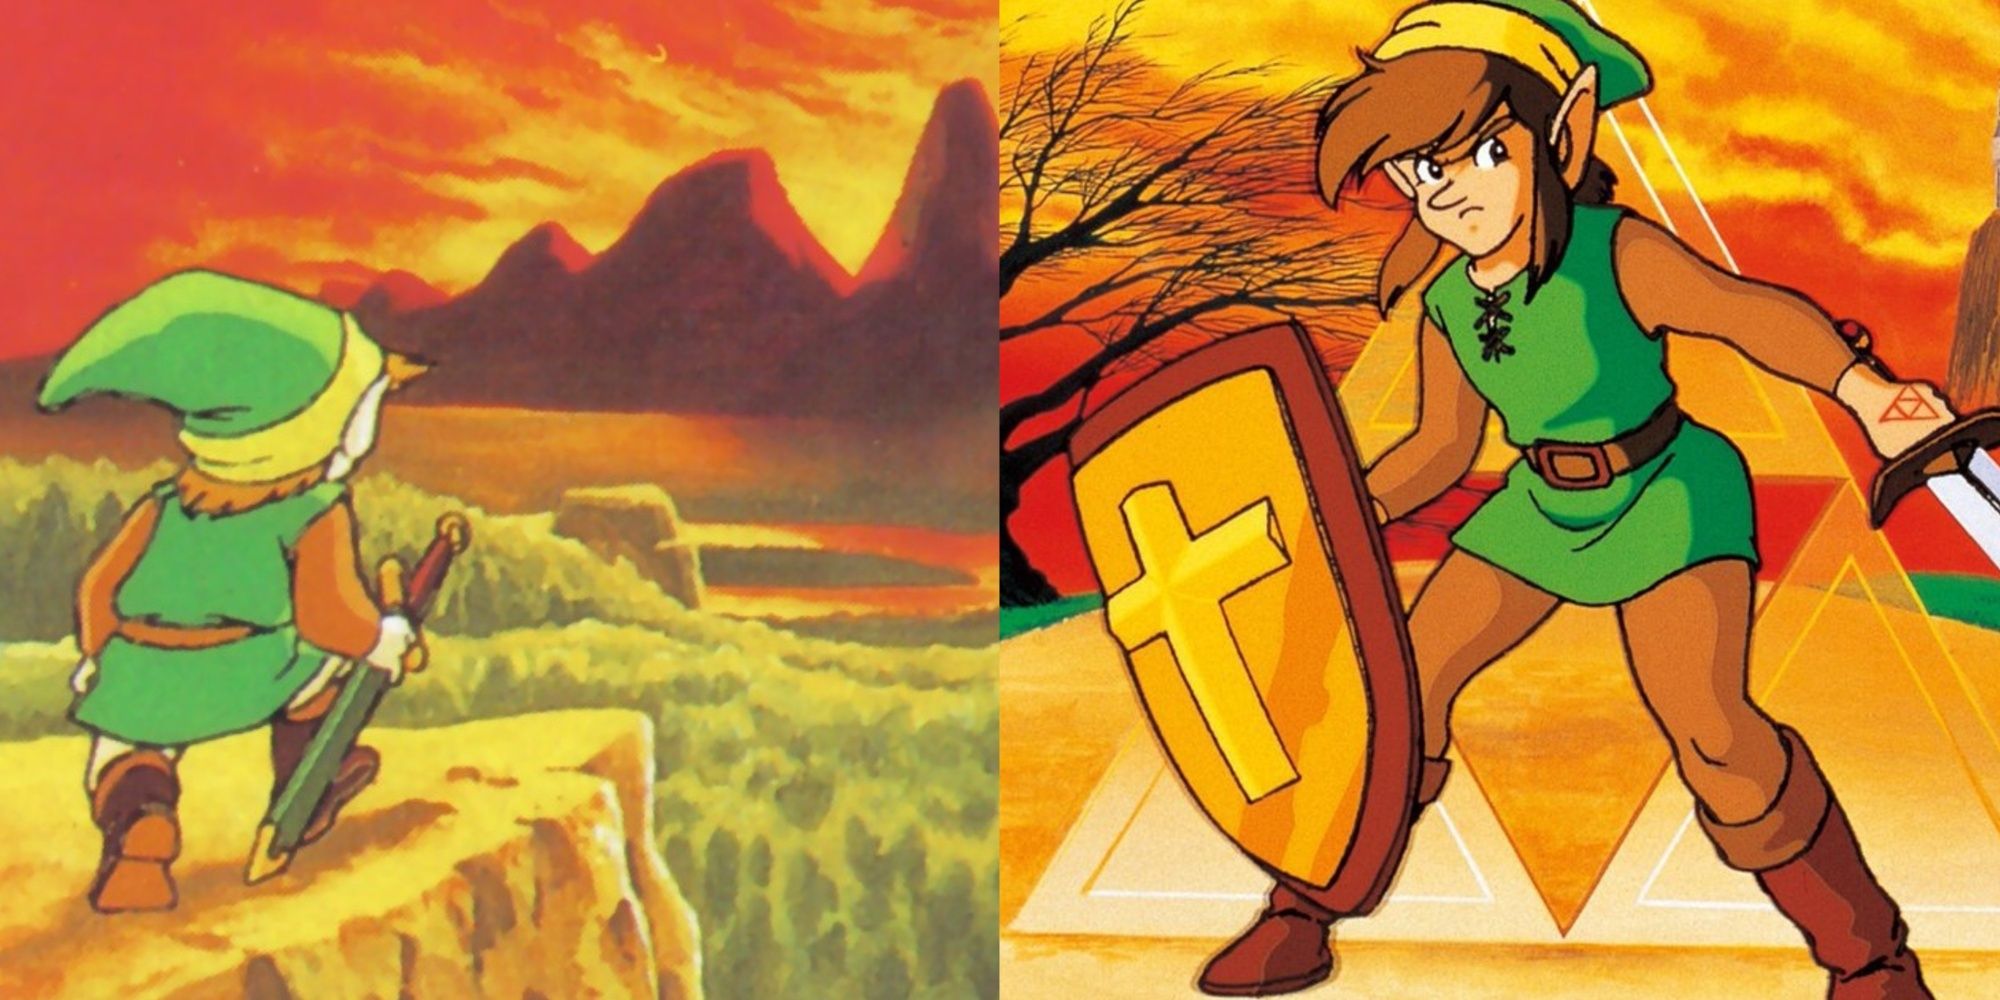 Split image of Link in official The Legend of Zelda art and Link in official Zelda 2 The Adventure of Link art